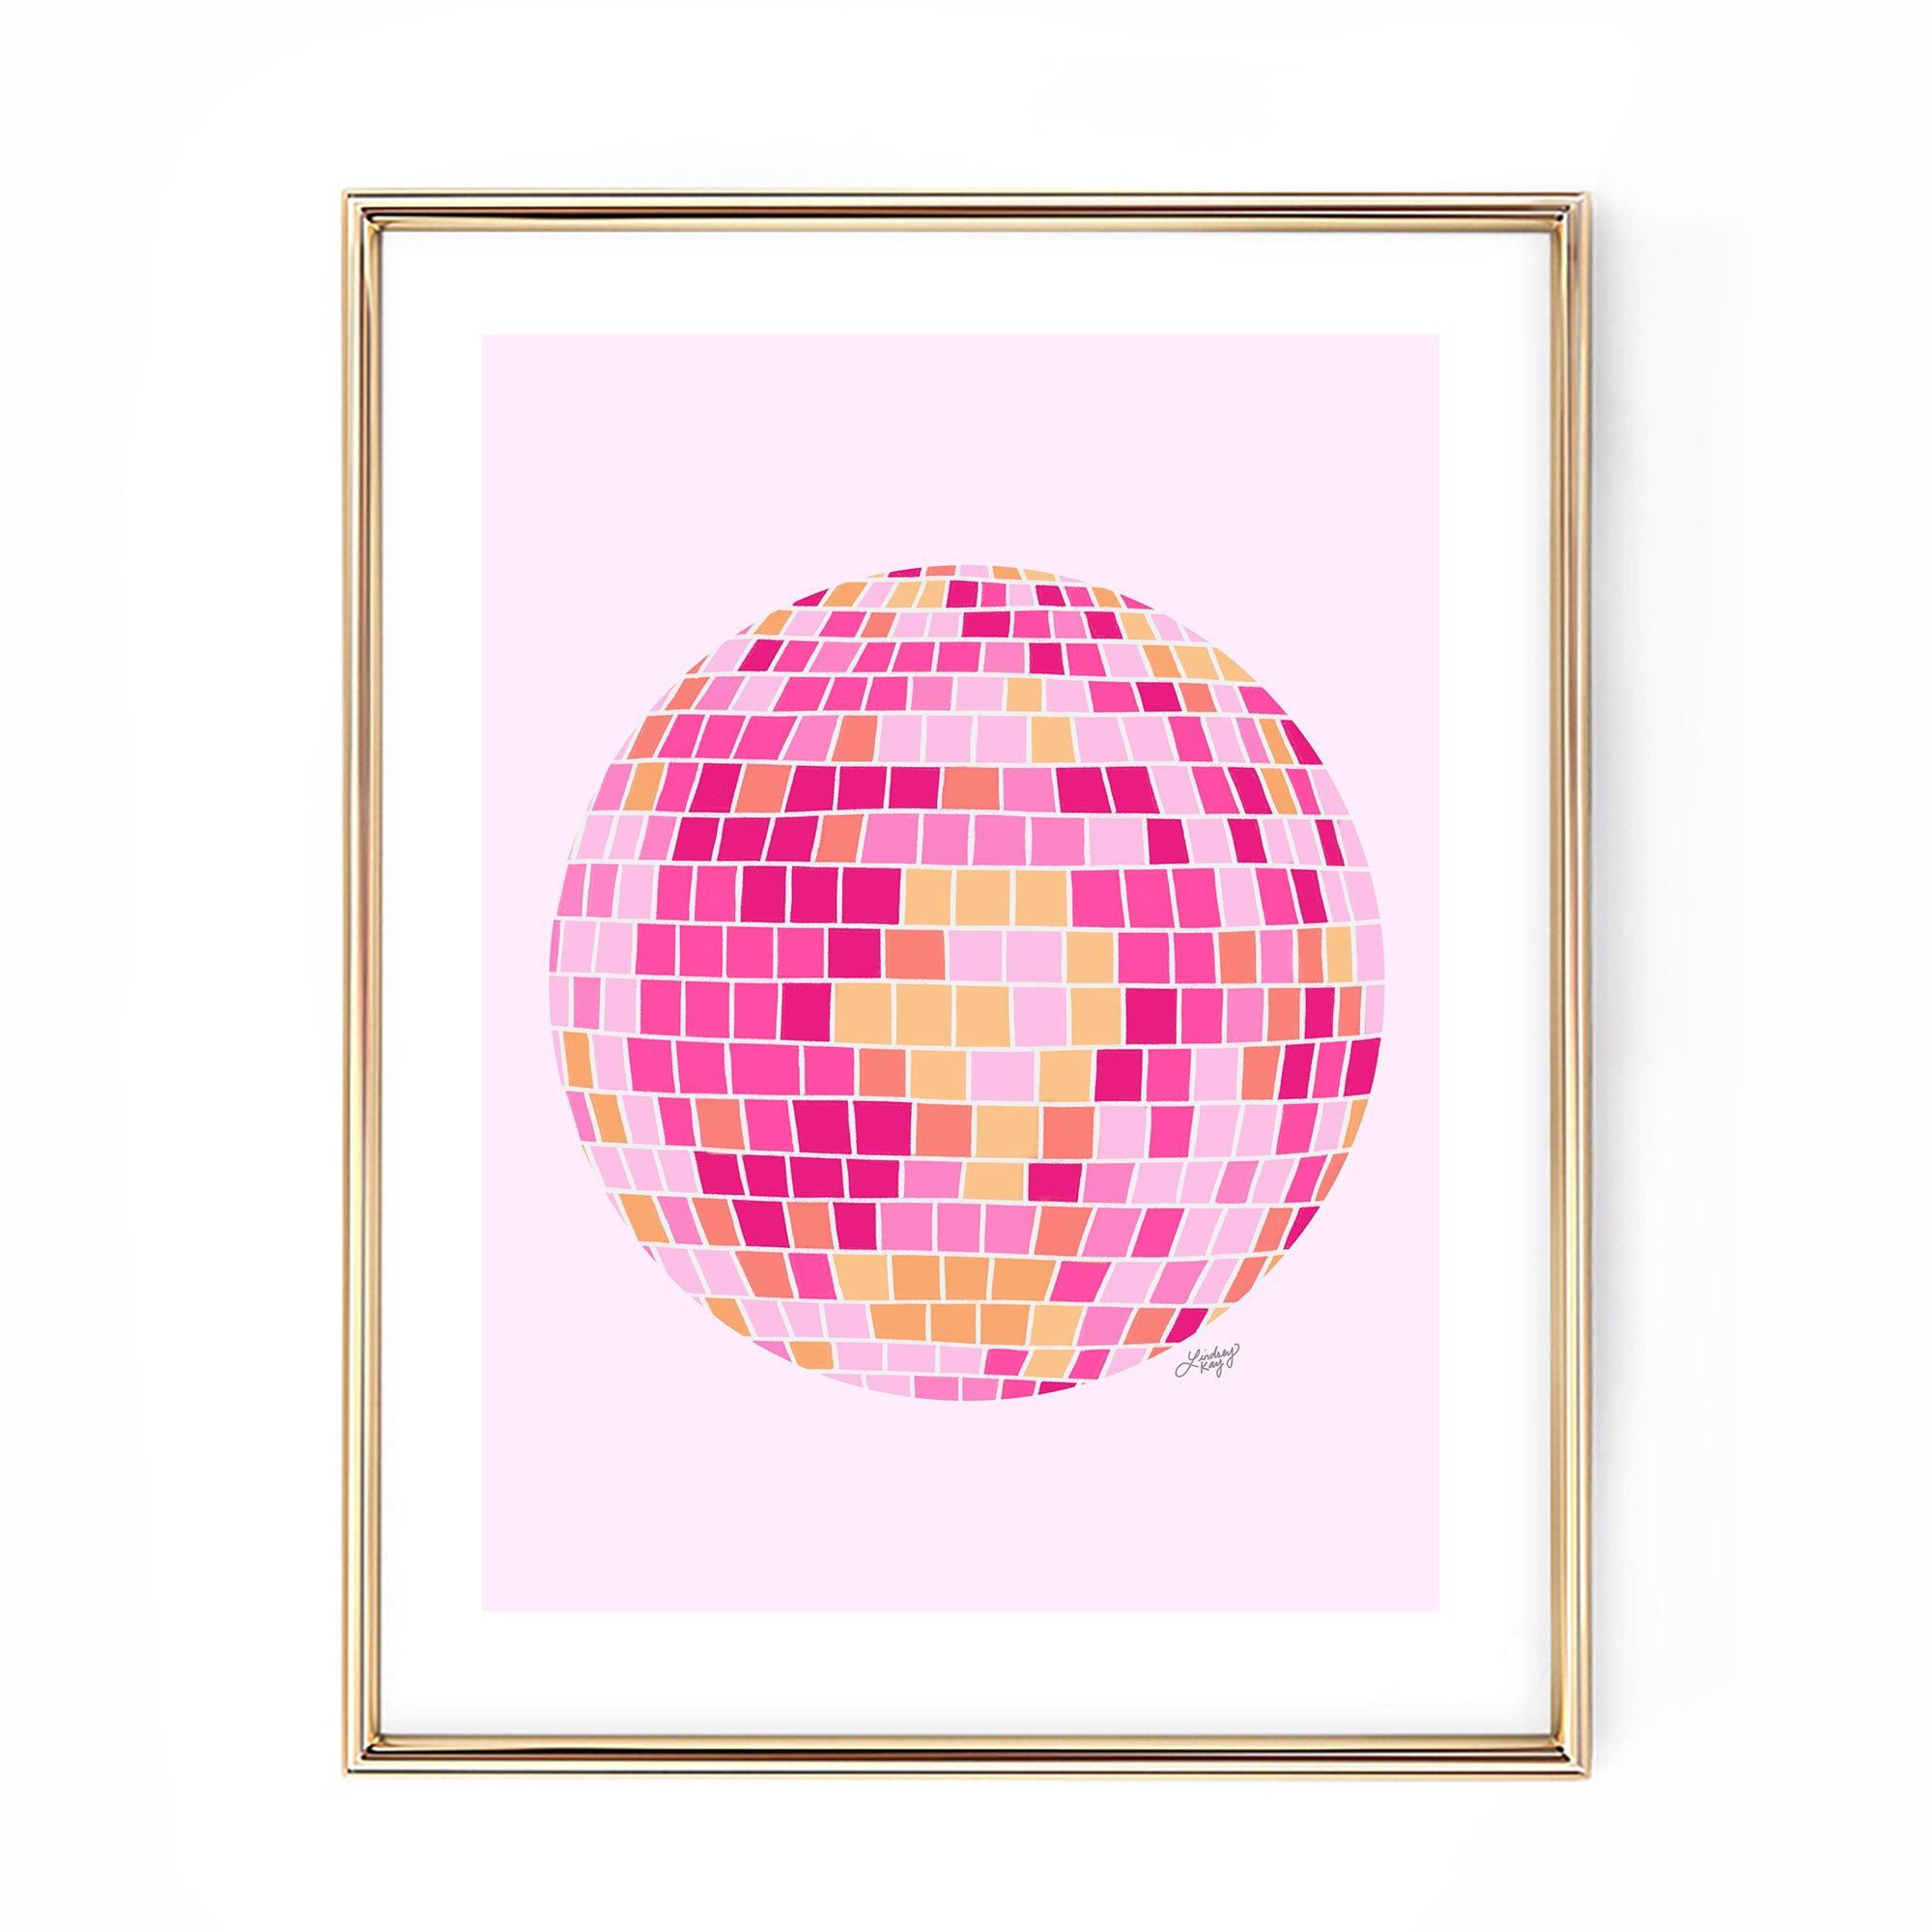 Disco Ball - Wrapped Canvas Print